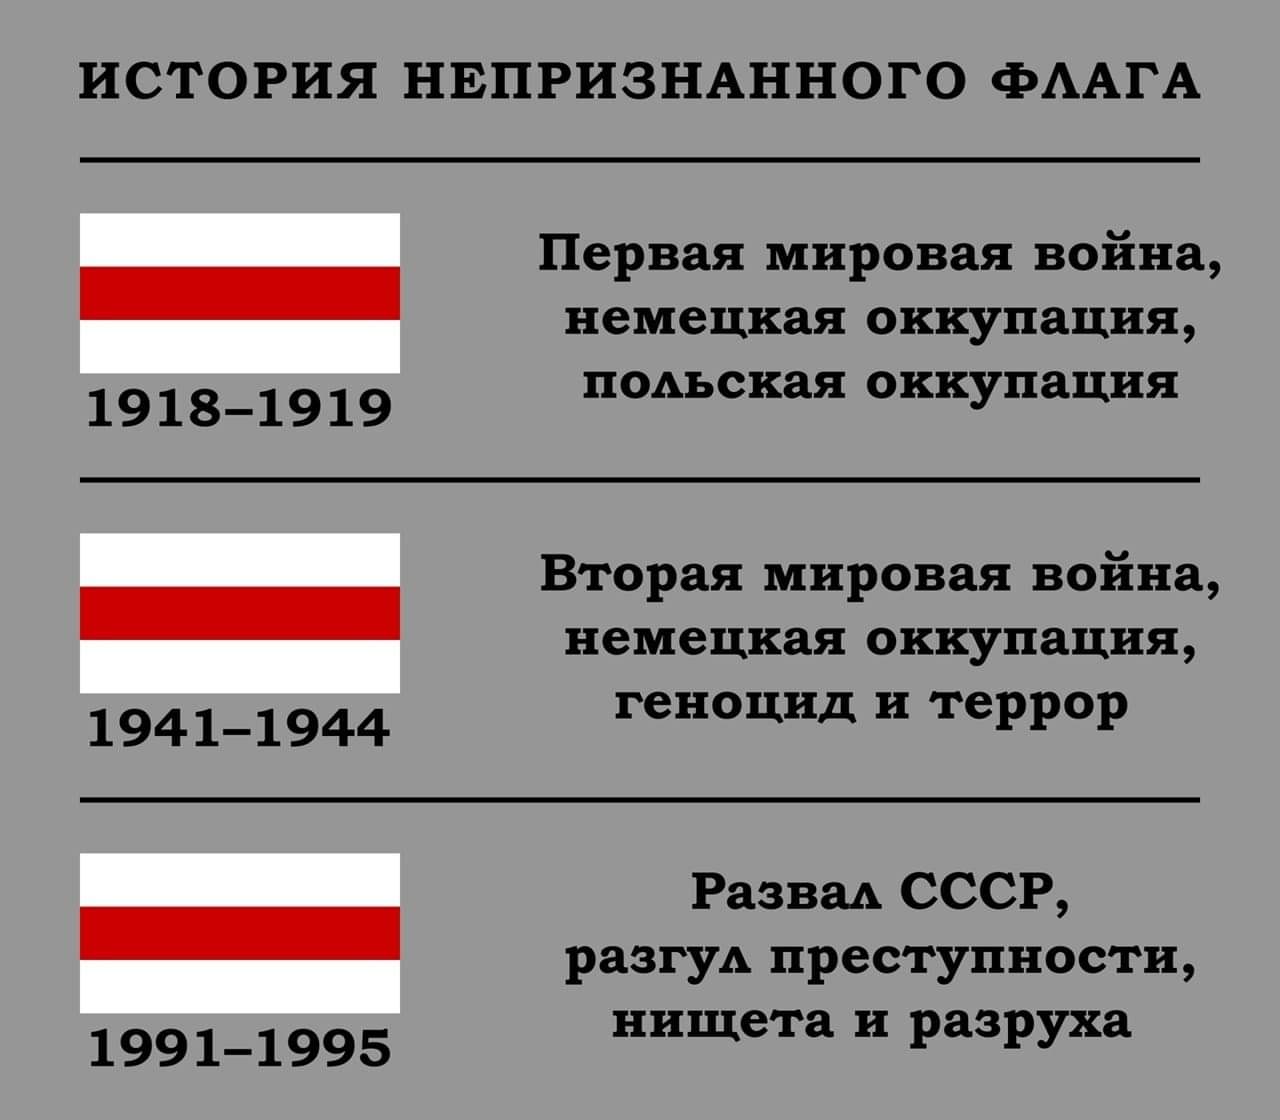 Бчб флаг это. БЧБ флаг. Бело-красно-белый флаг история. Флаг Беларуси бело-красно-белый. Бело красно белый флаг коллаборационистов.